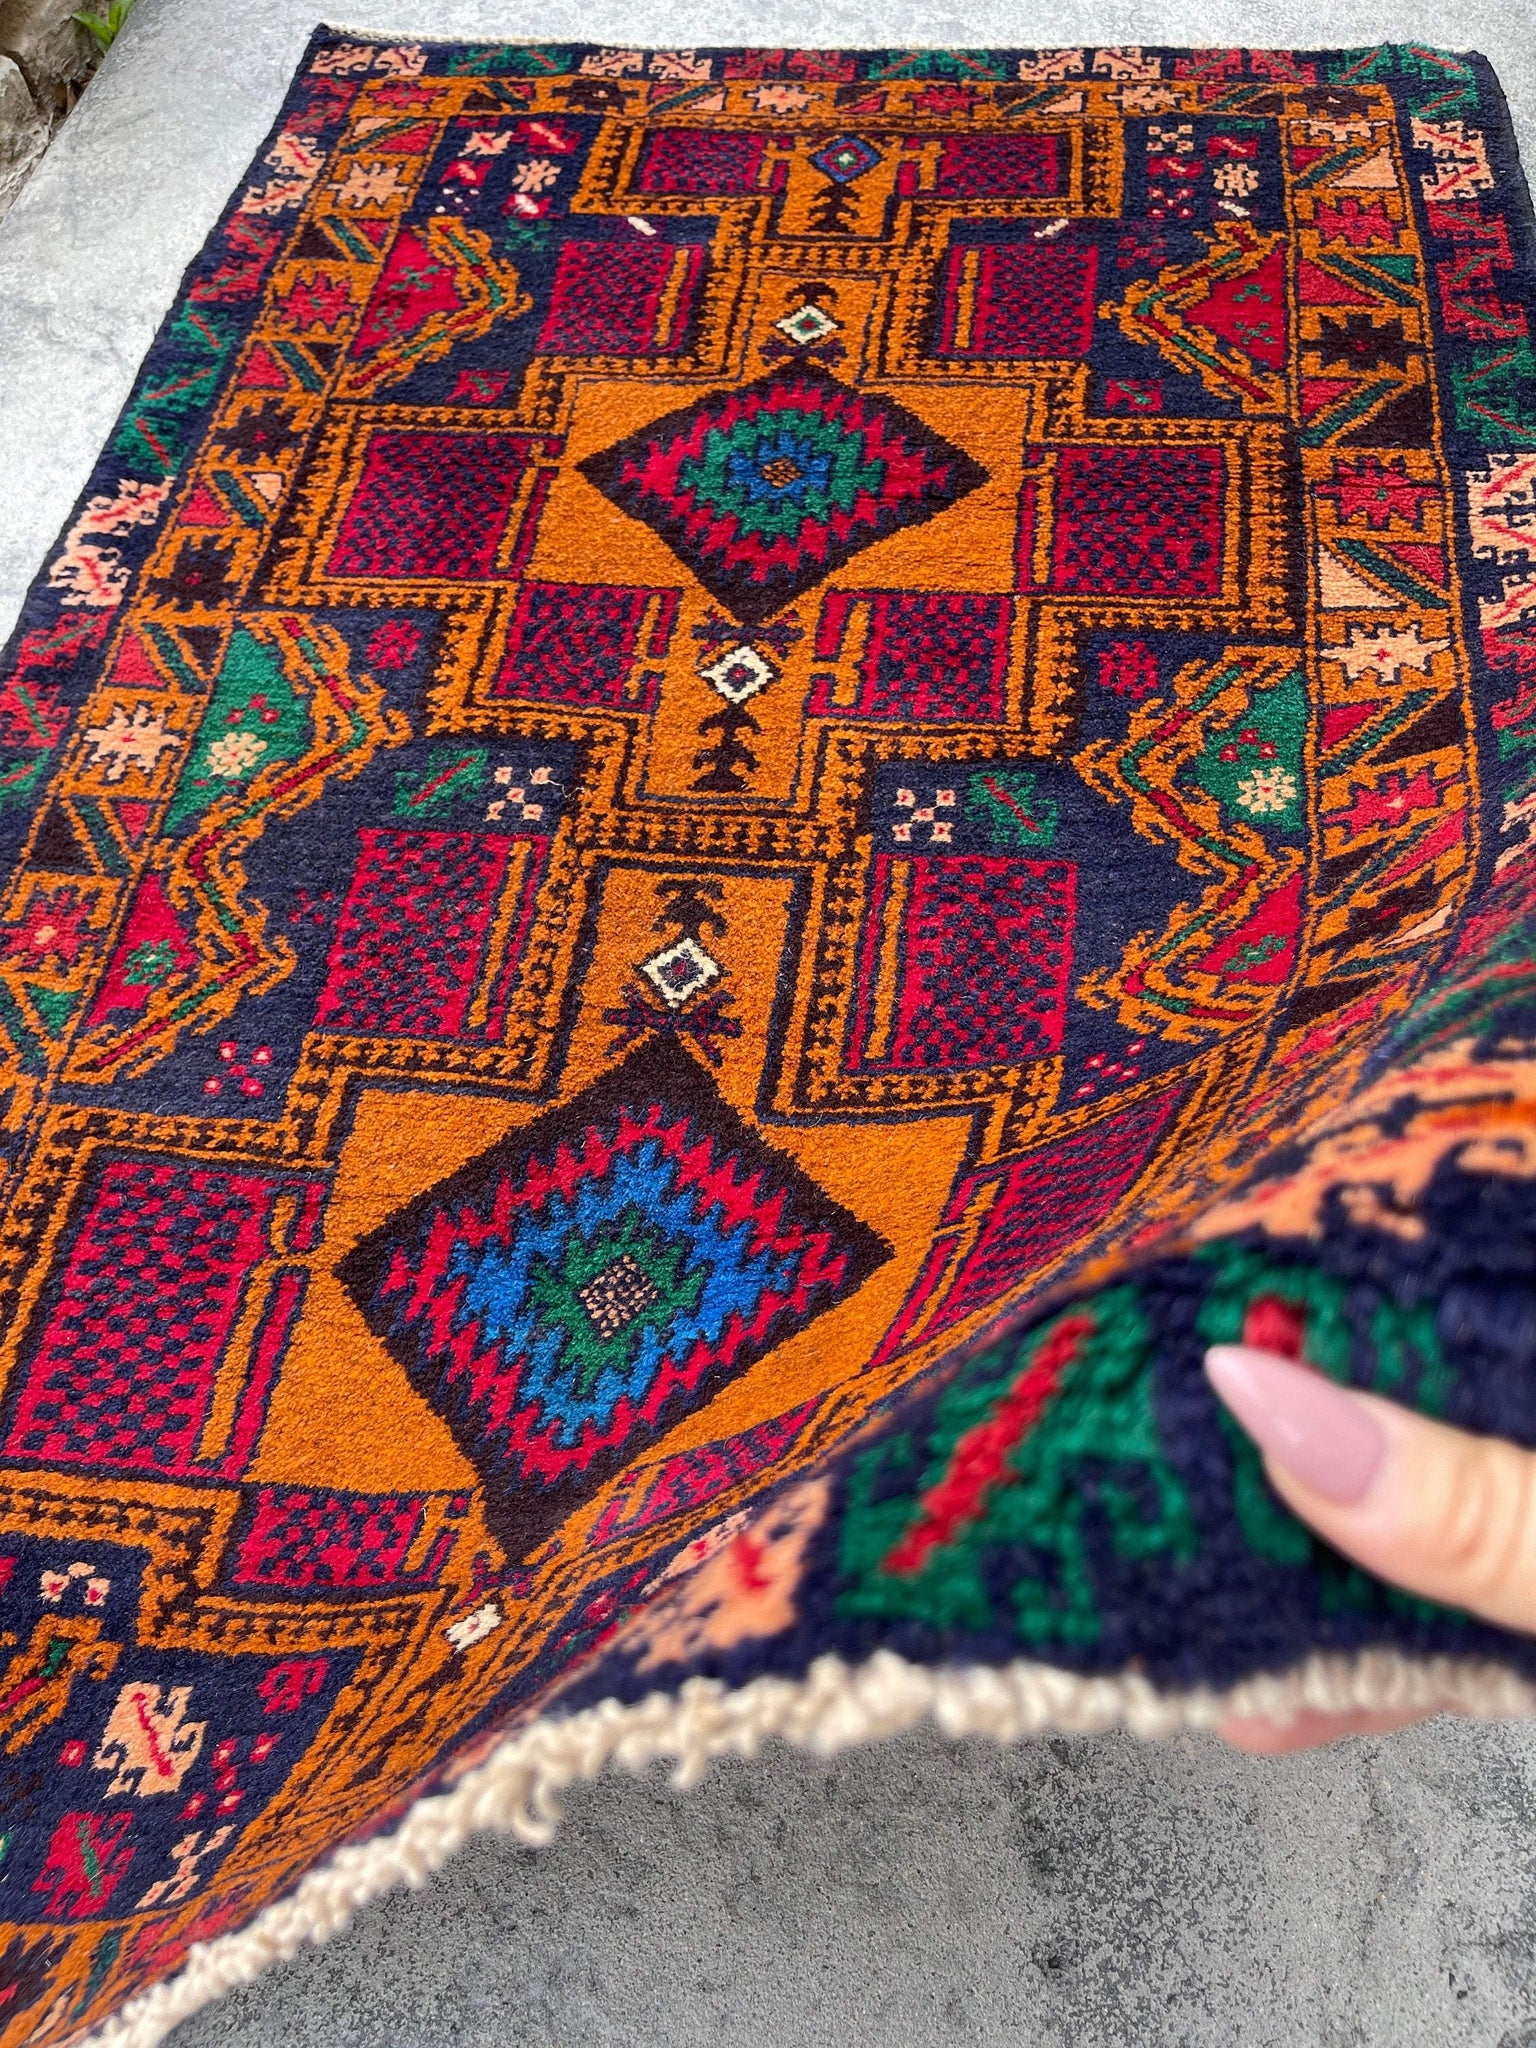 3x4 (90x120) Handmade Vintage Afghan Rug | Orange Black Red Blue Green Cream | Nomadic Baluch Boho Bohemian Tribal Turkish Moroccan Wool